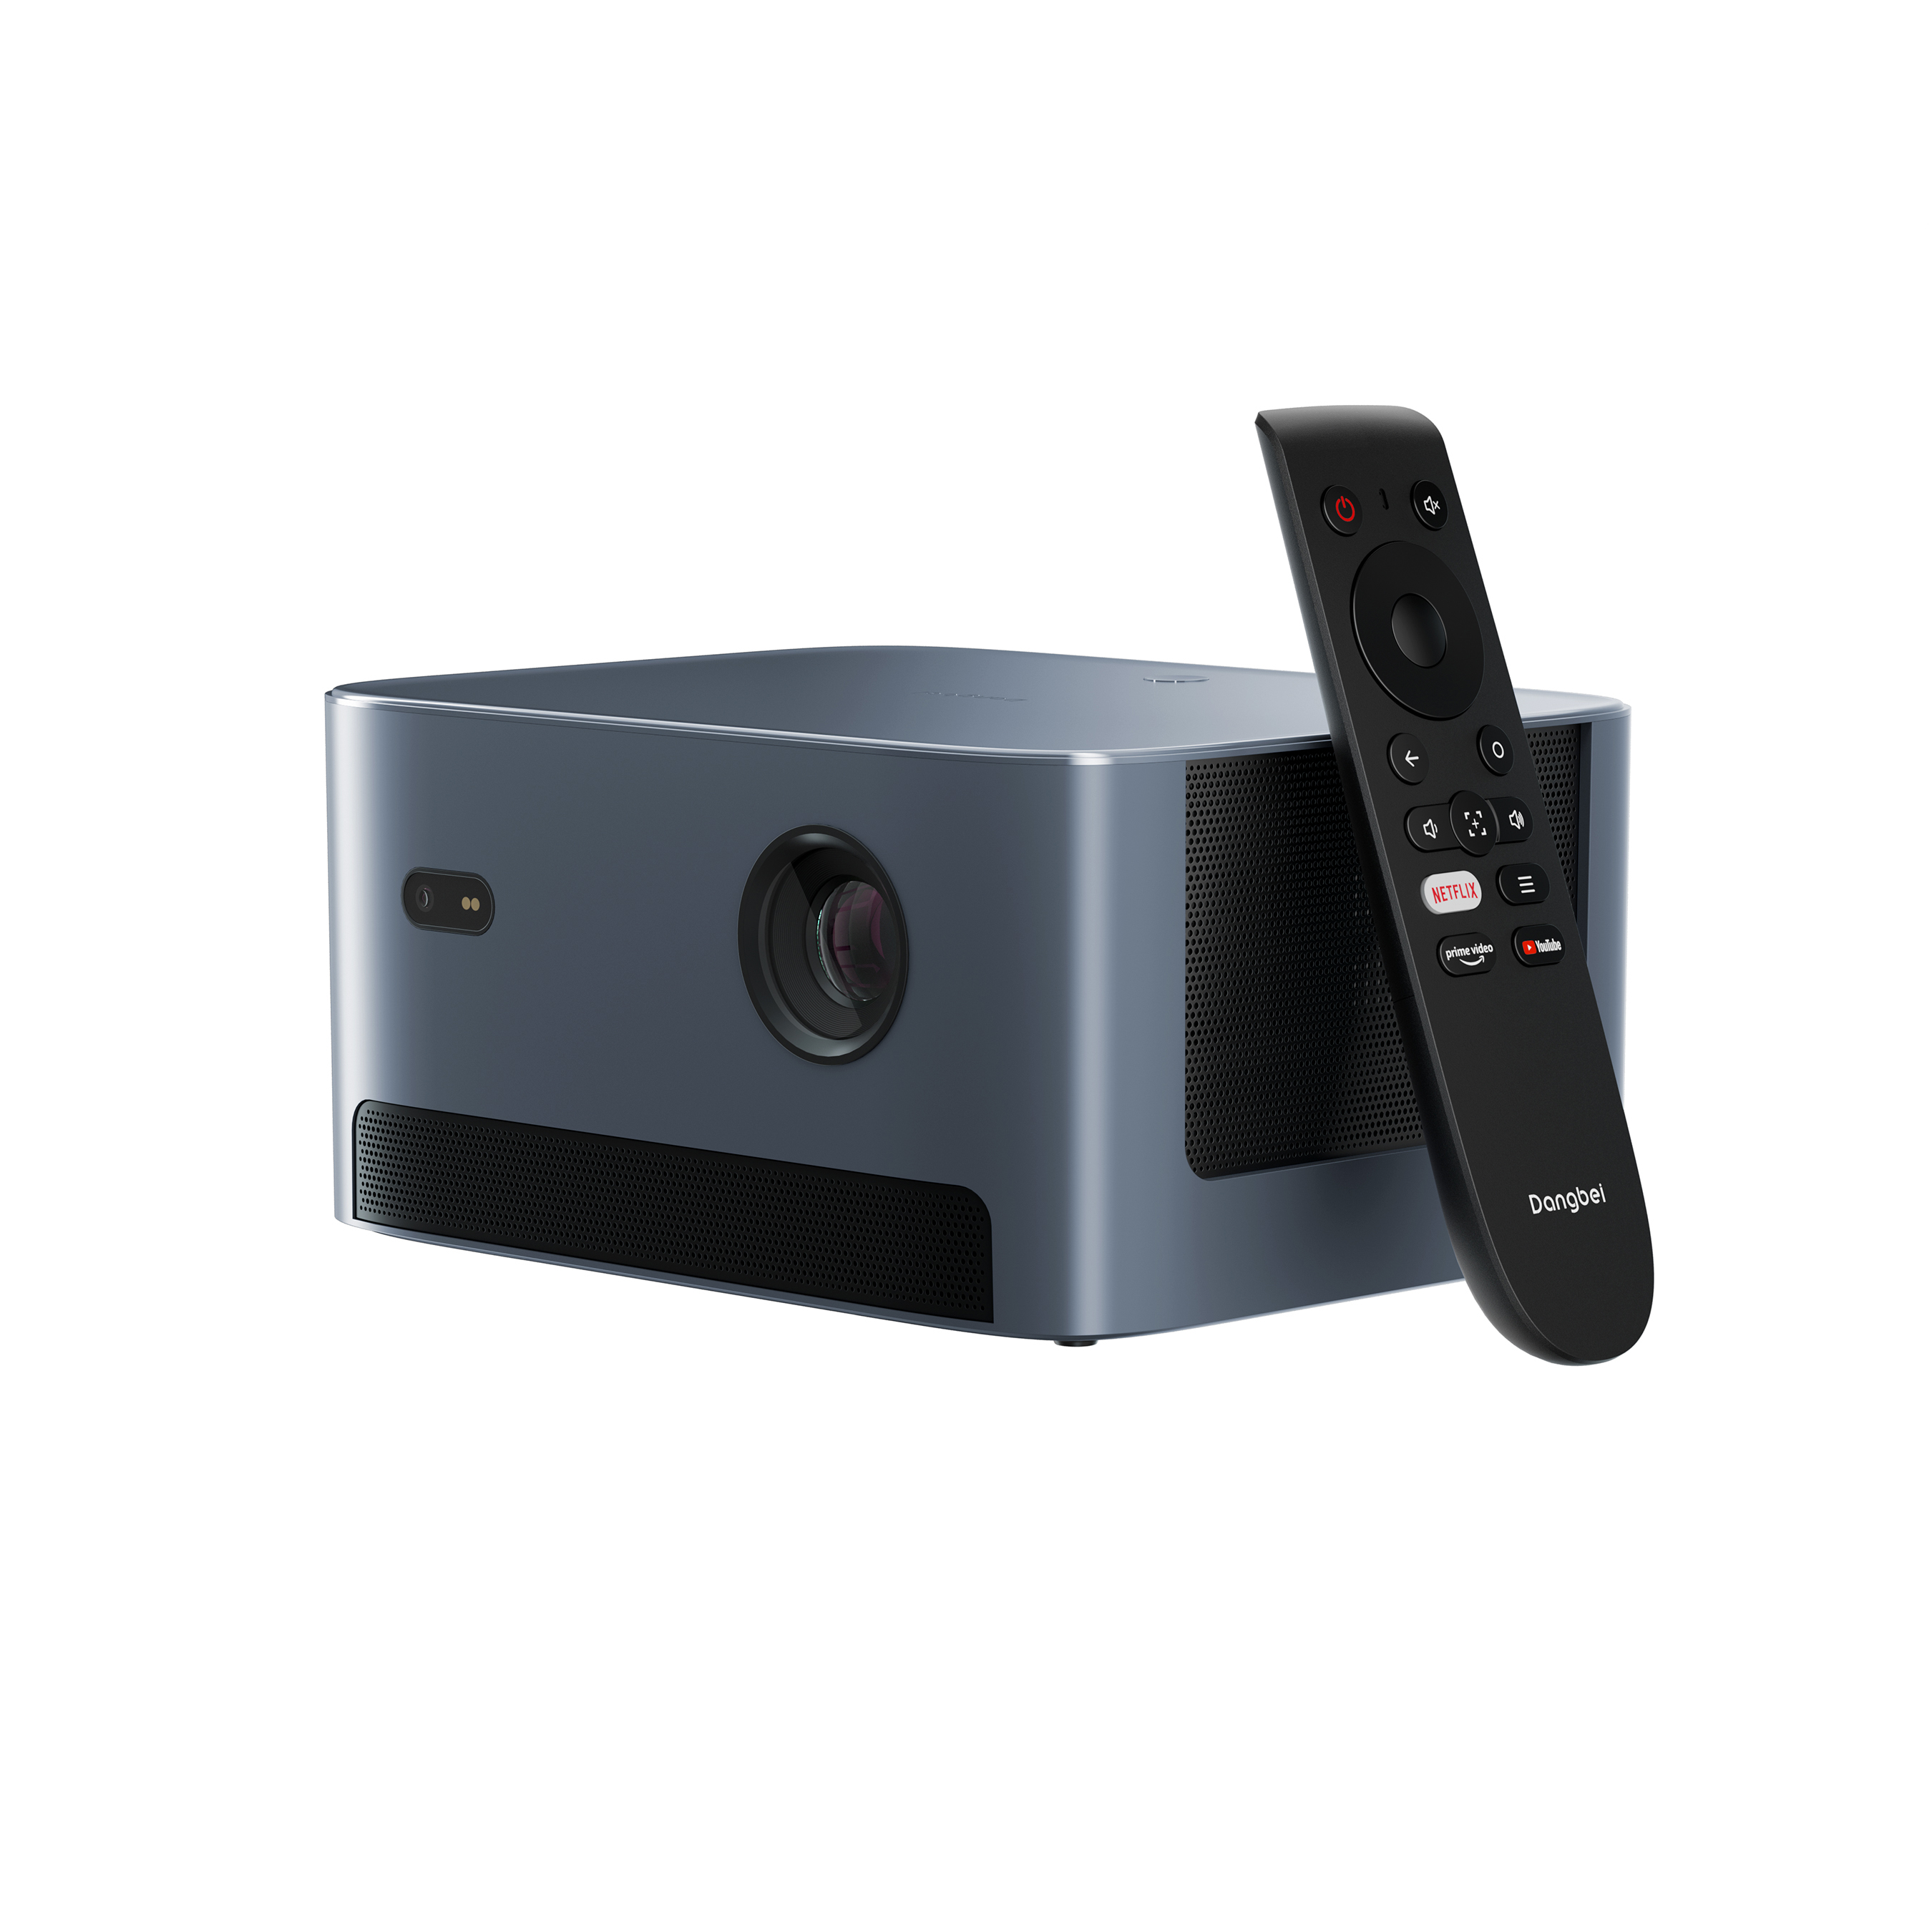 DANGBEI 1080P Neo 540 Netflix Blau ANSI-Lumen) Beamer(Full-HD,